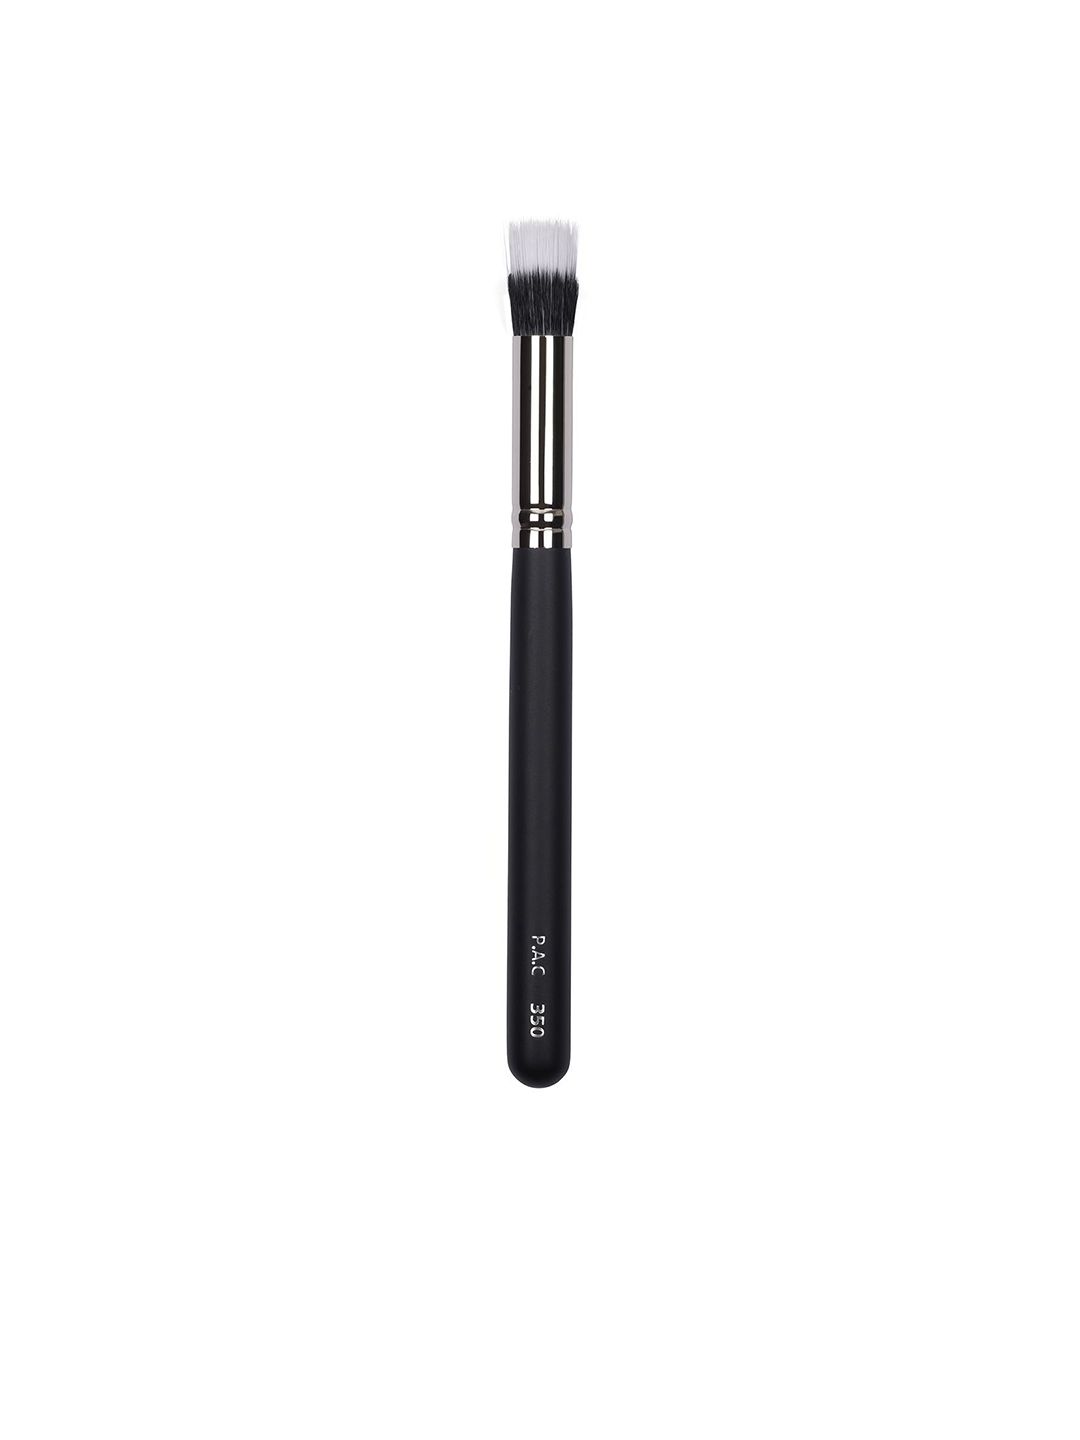 PAC Black & White Concealer Brush - 350 Price in India